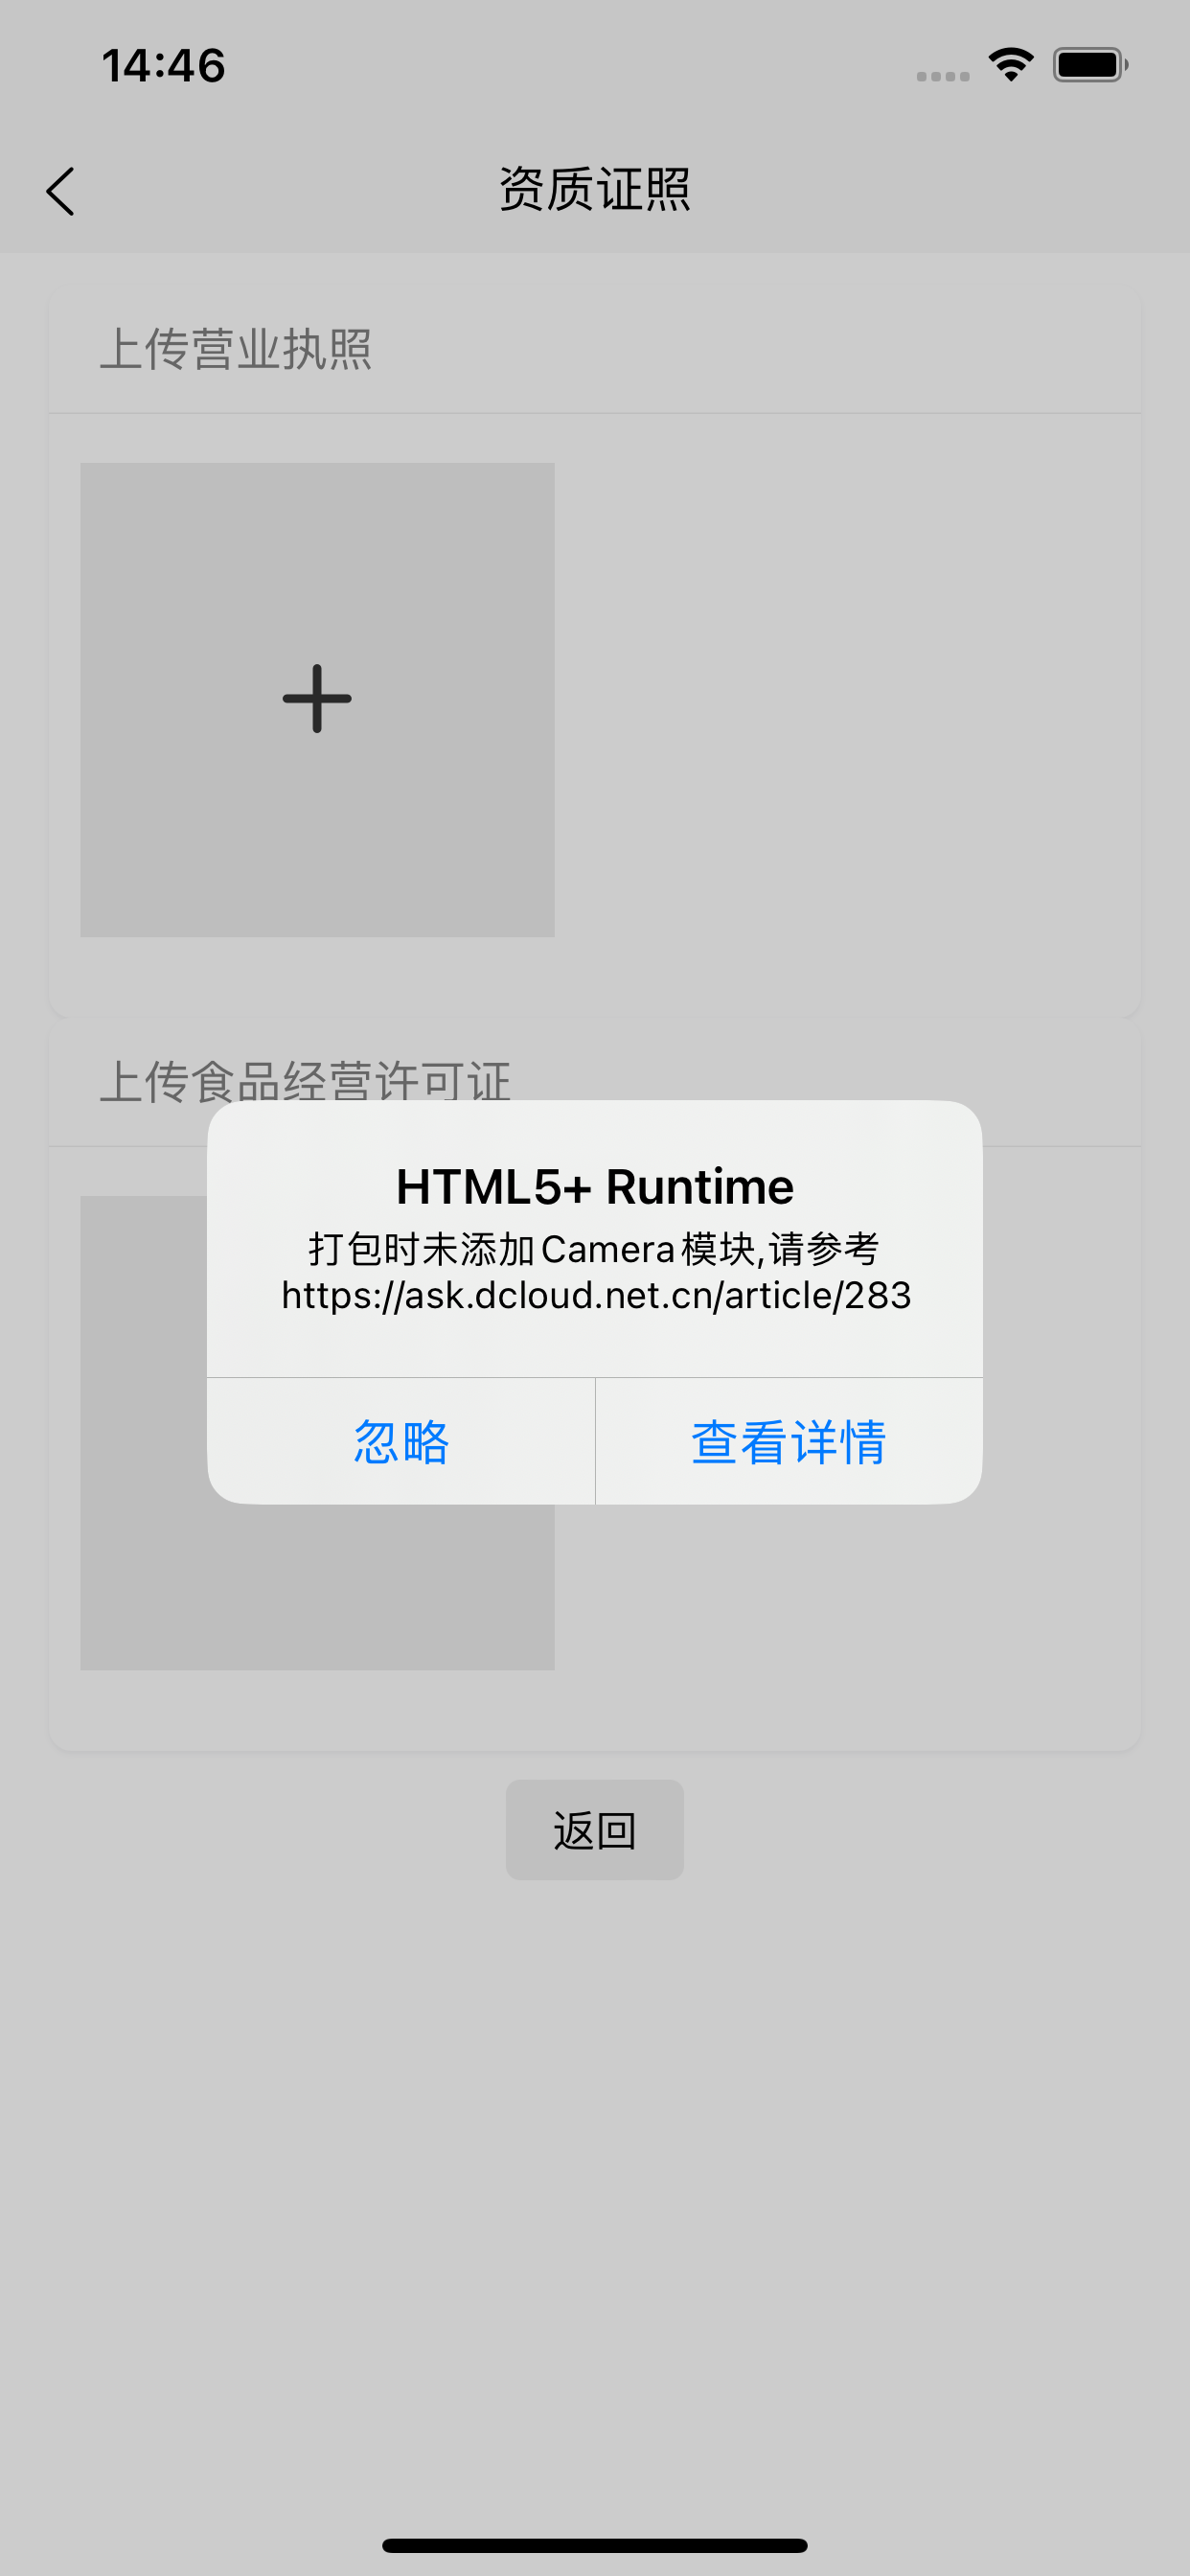 HTML5+Runtime打包时未添加 Camera 模块，请参考https://ask.dcloud.net.cn/article/283